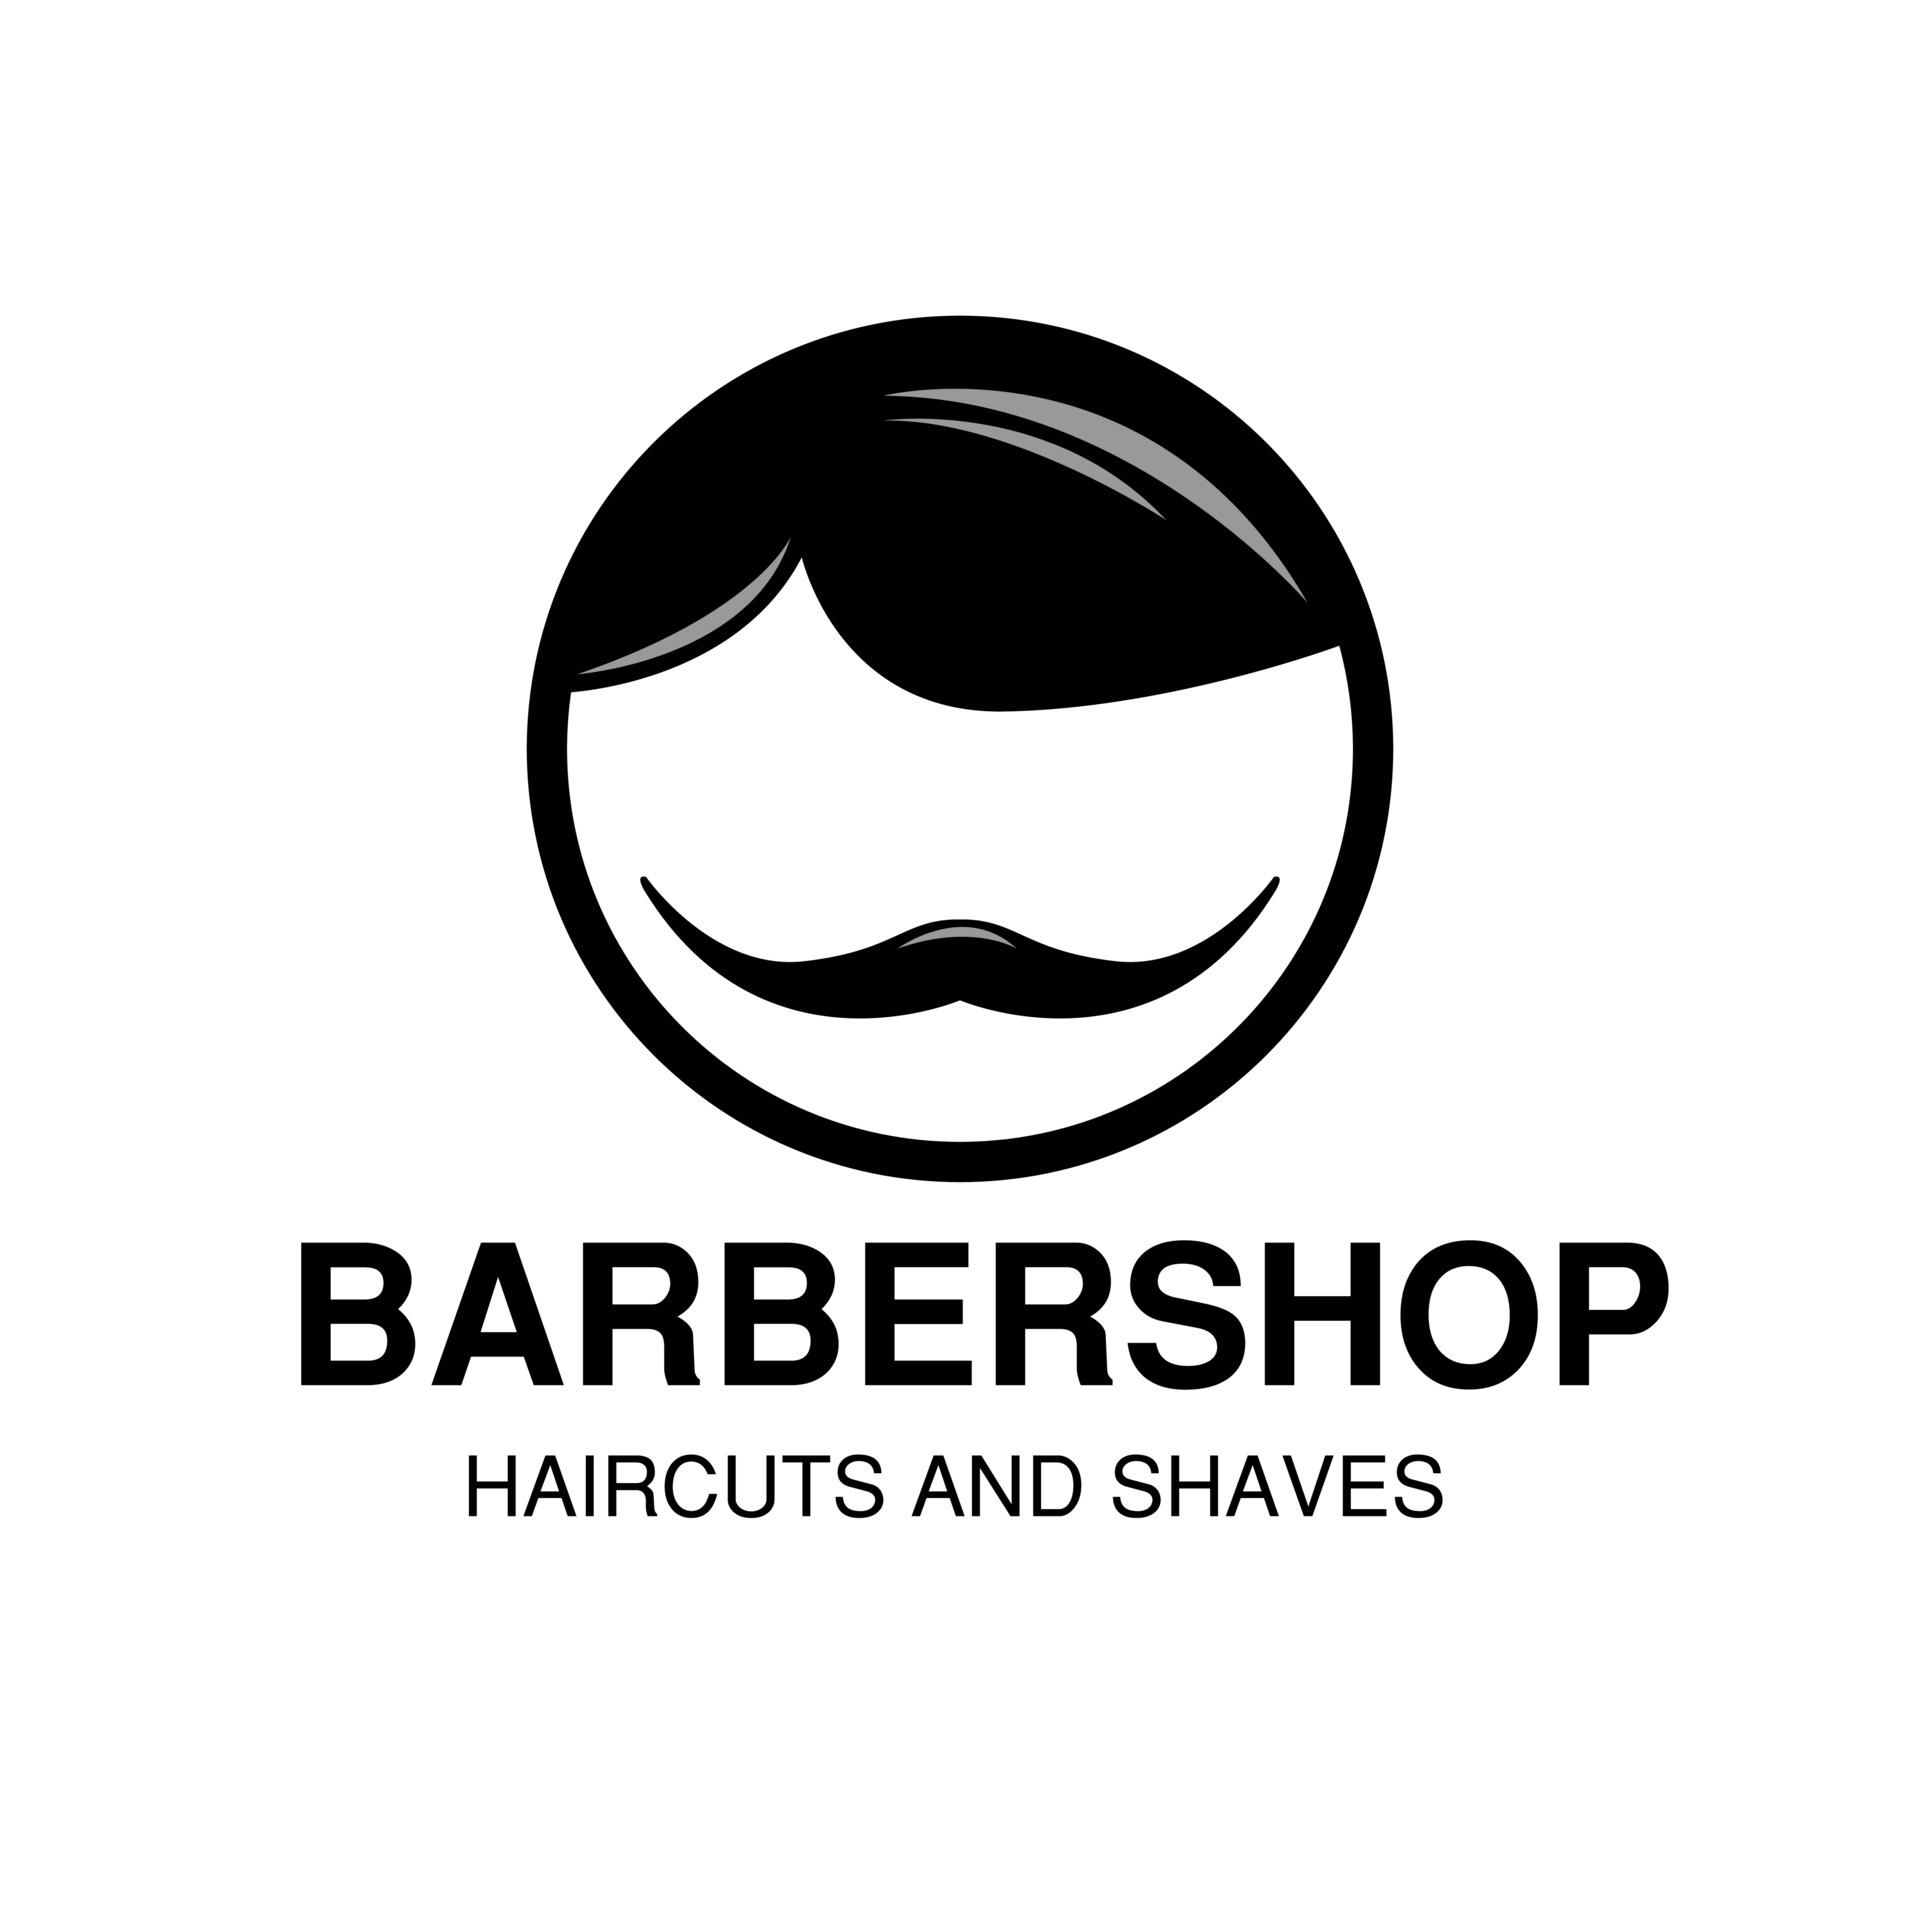 Illustration vector design of barbershop logo for company or business ...